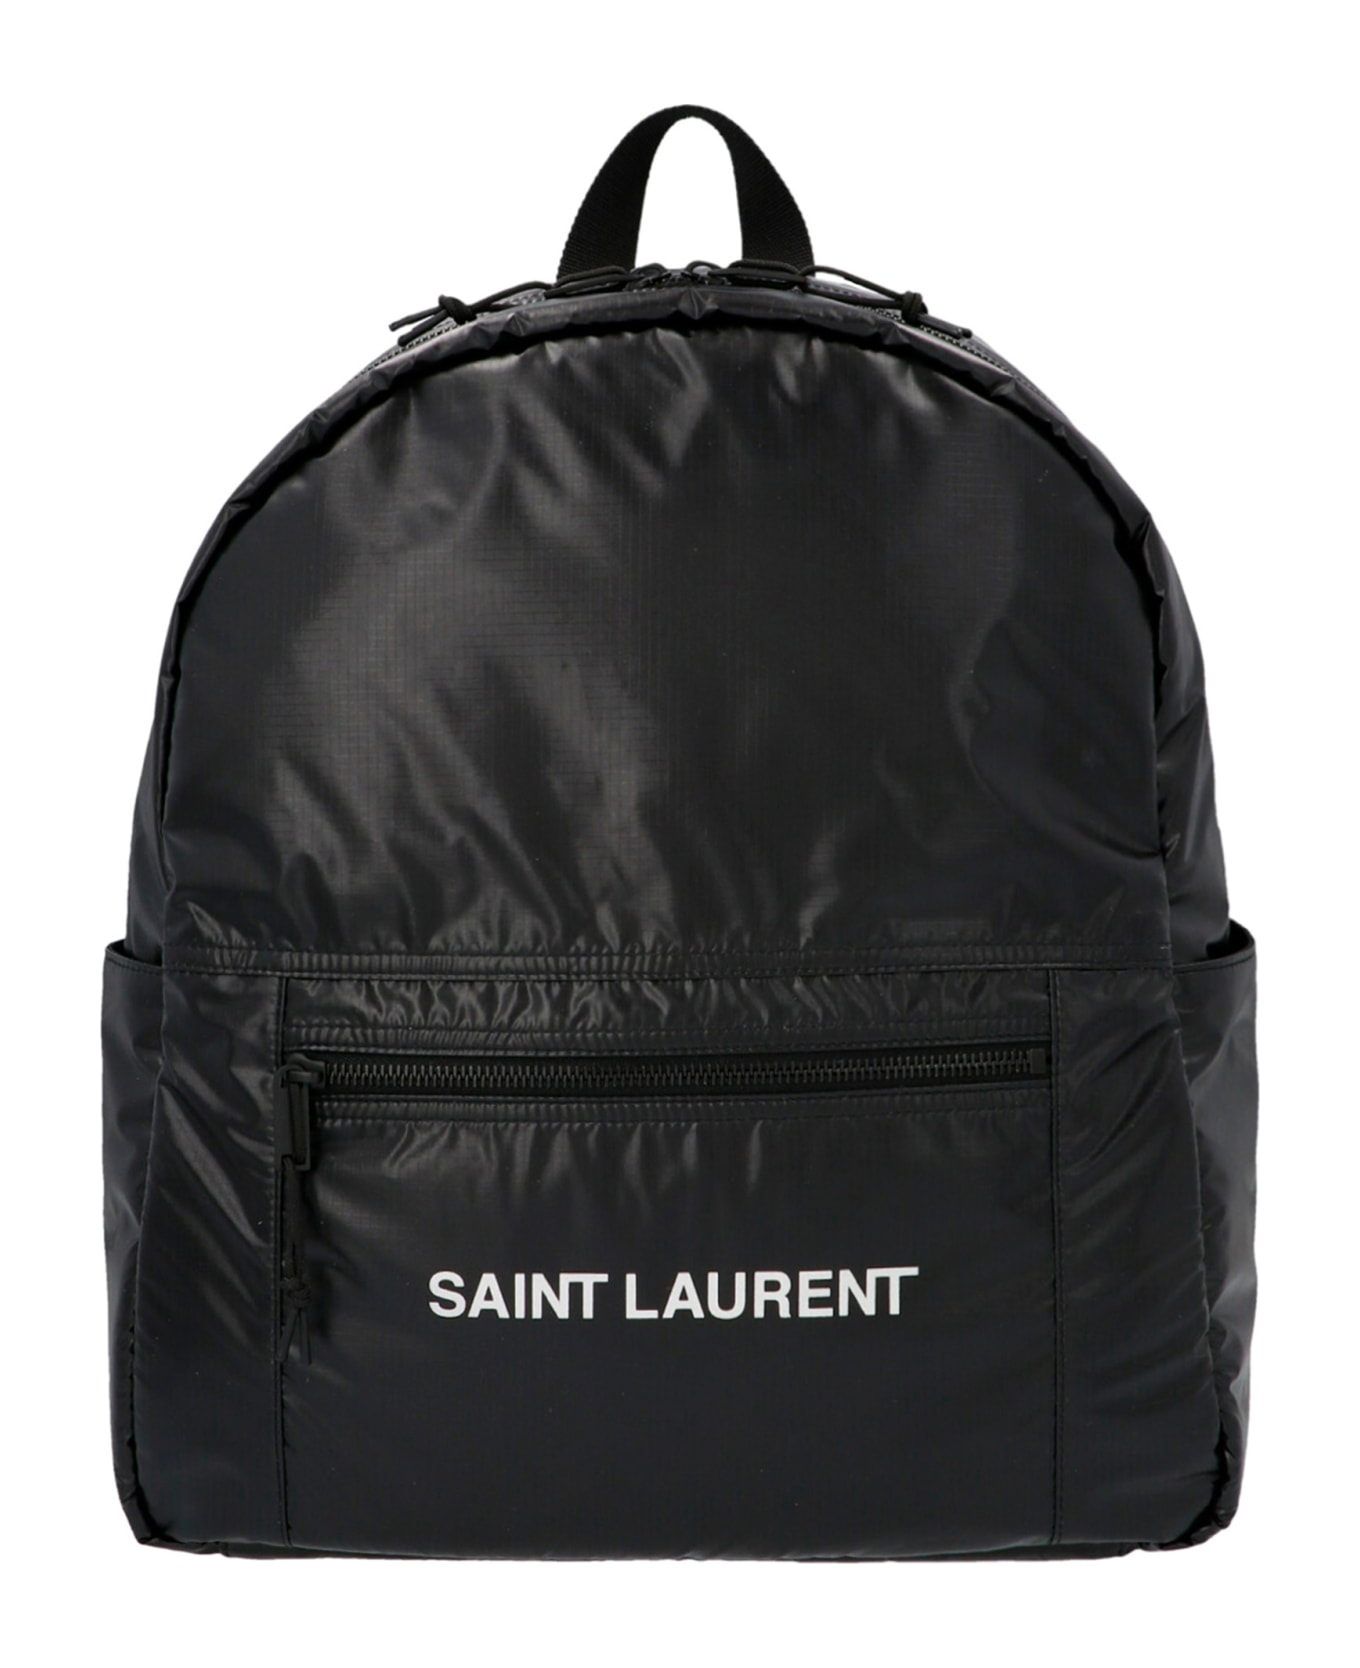 Saint Laurent Backpack - Nero/argento